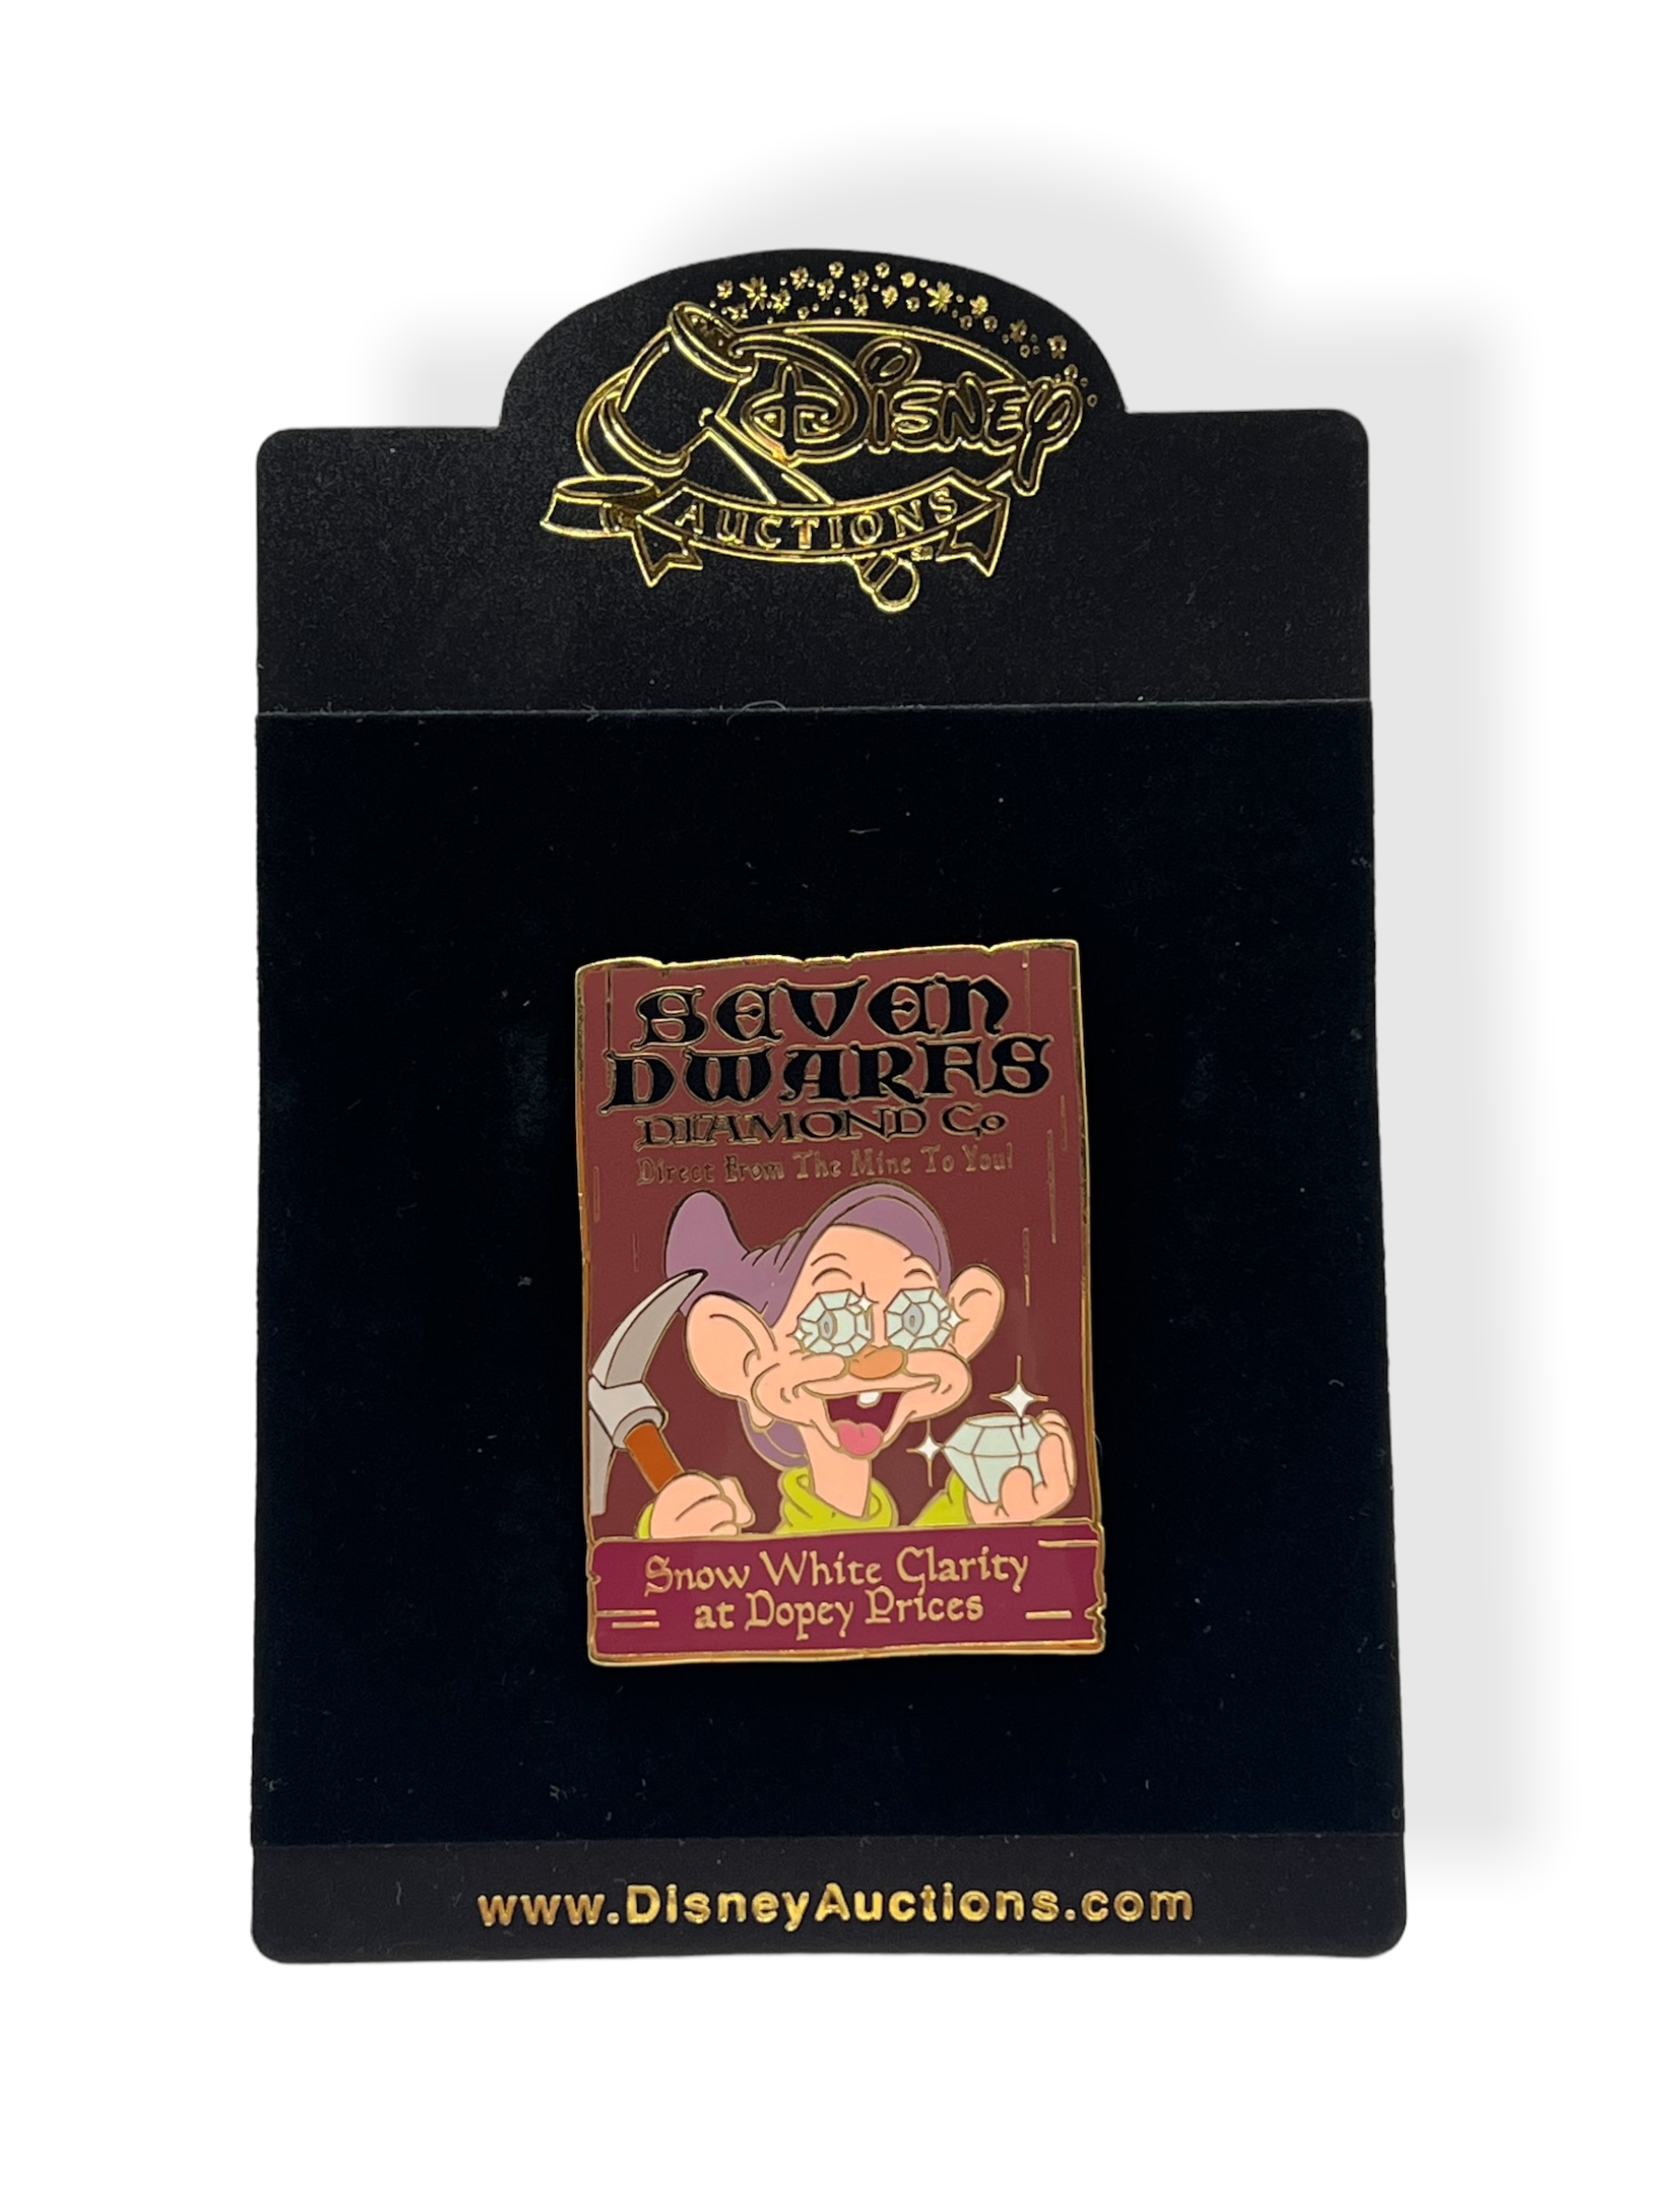 Disney Auctions Business Ads Seven Dwarfs Diamond Co. Pin